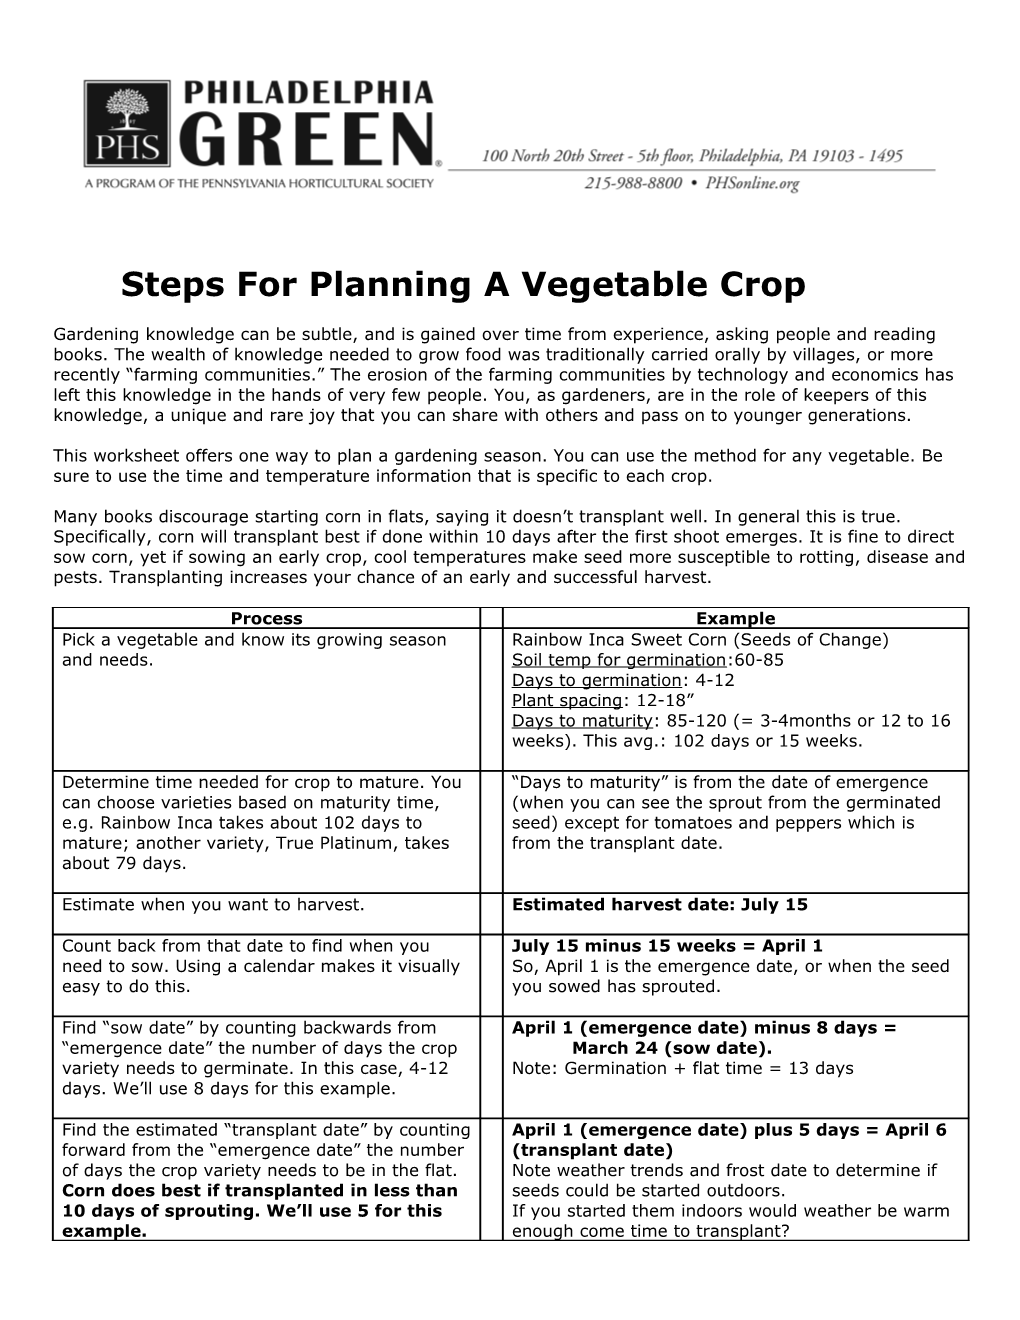 Steps for Planning a Vegetable Crop